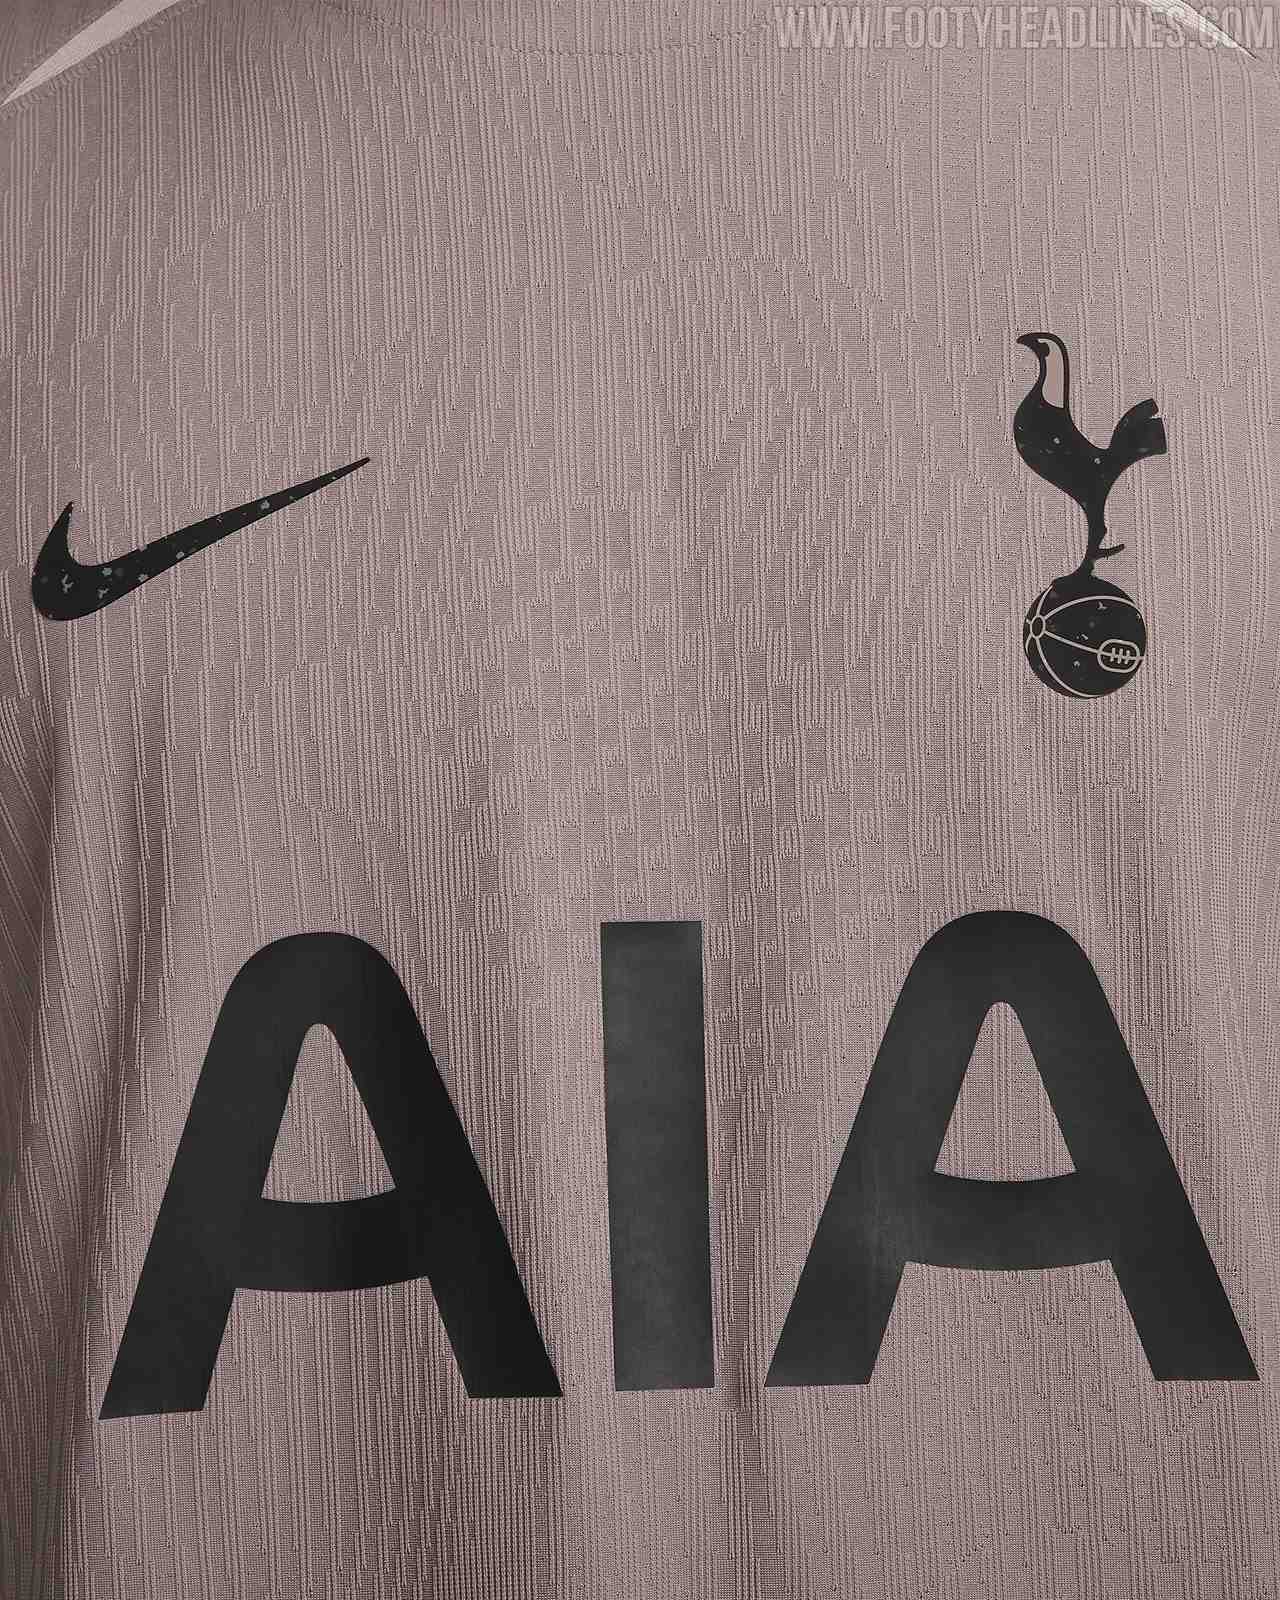 Is Tottenham's Strange-Colored Third Kit a Disadvantage? - Footy Headlines